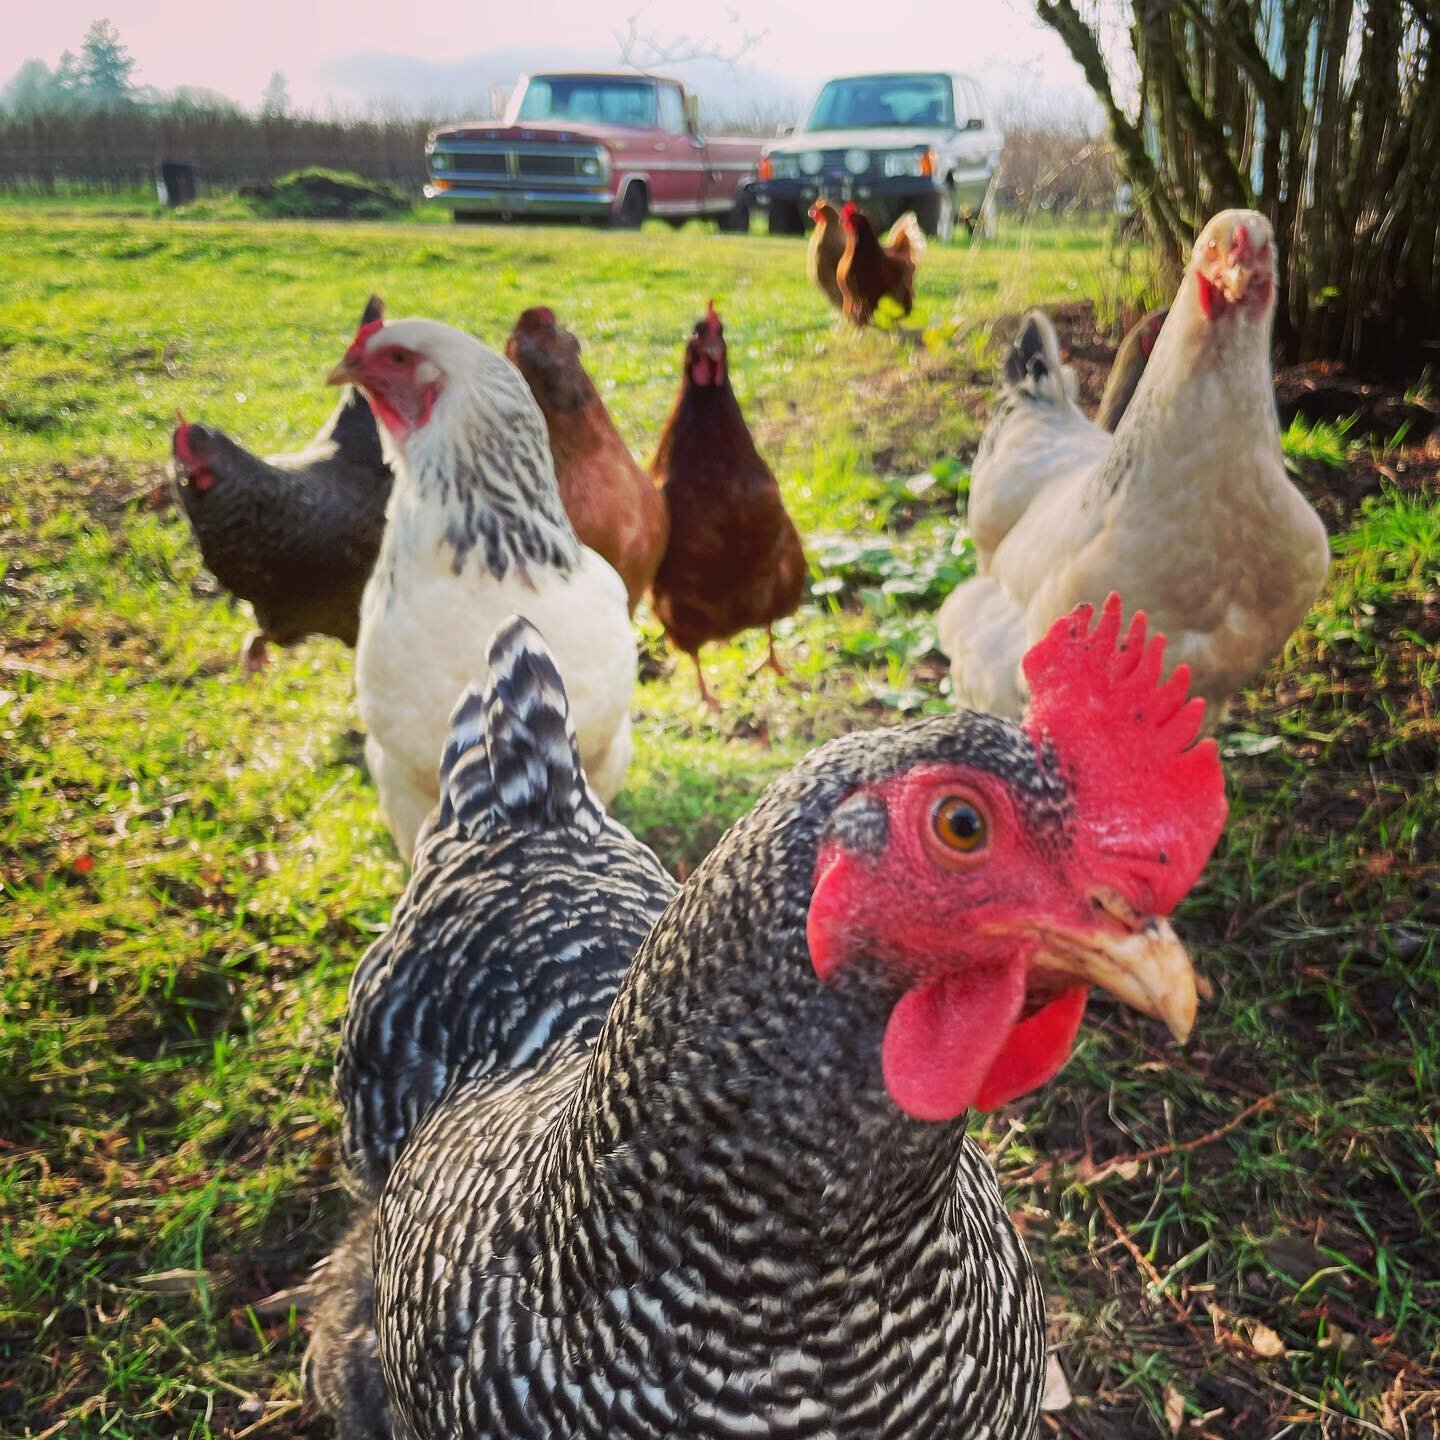 Particular clients.
.
.
.
.
#restorationcreek #familyprojects #muskavineyards #chickens #chickencoop